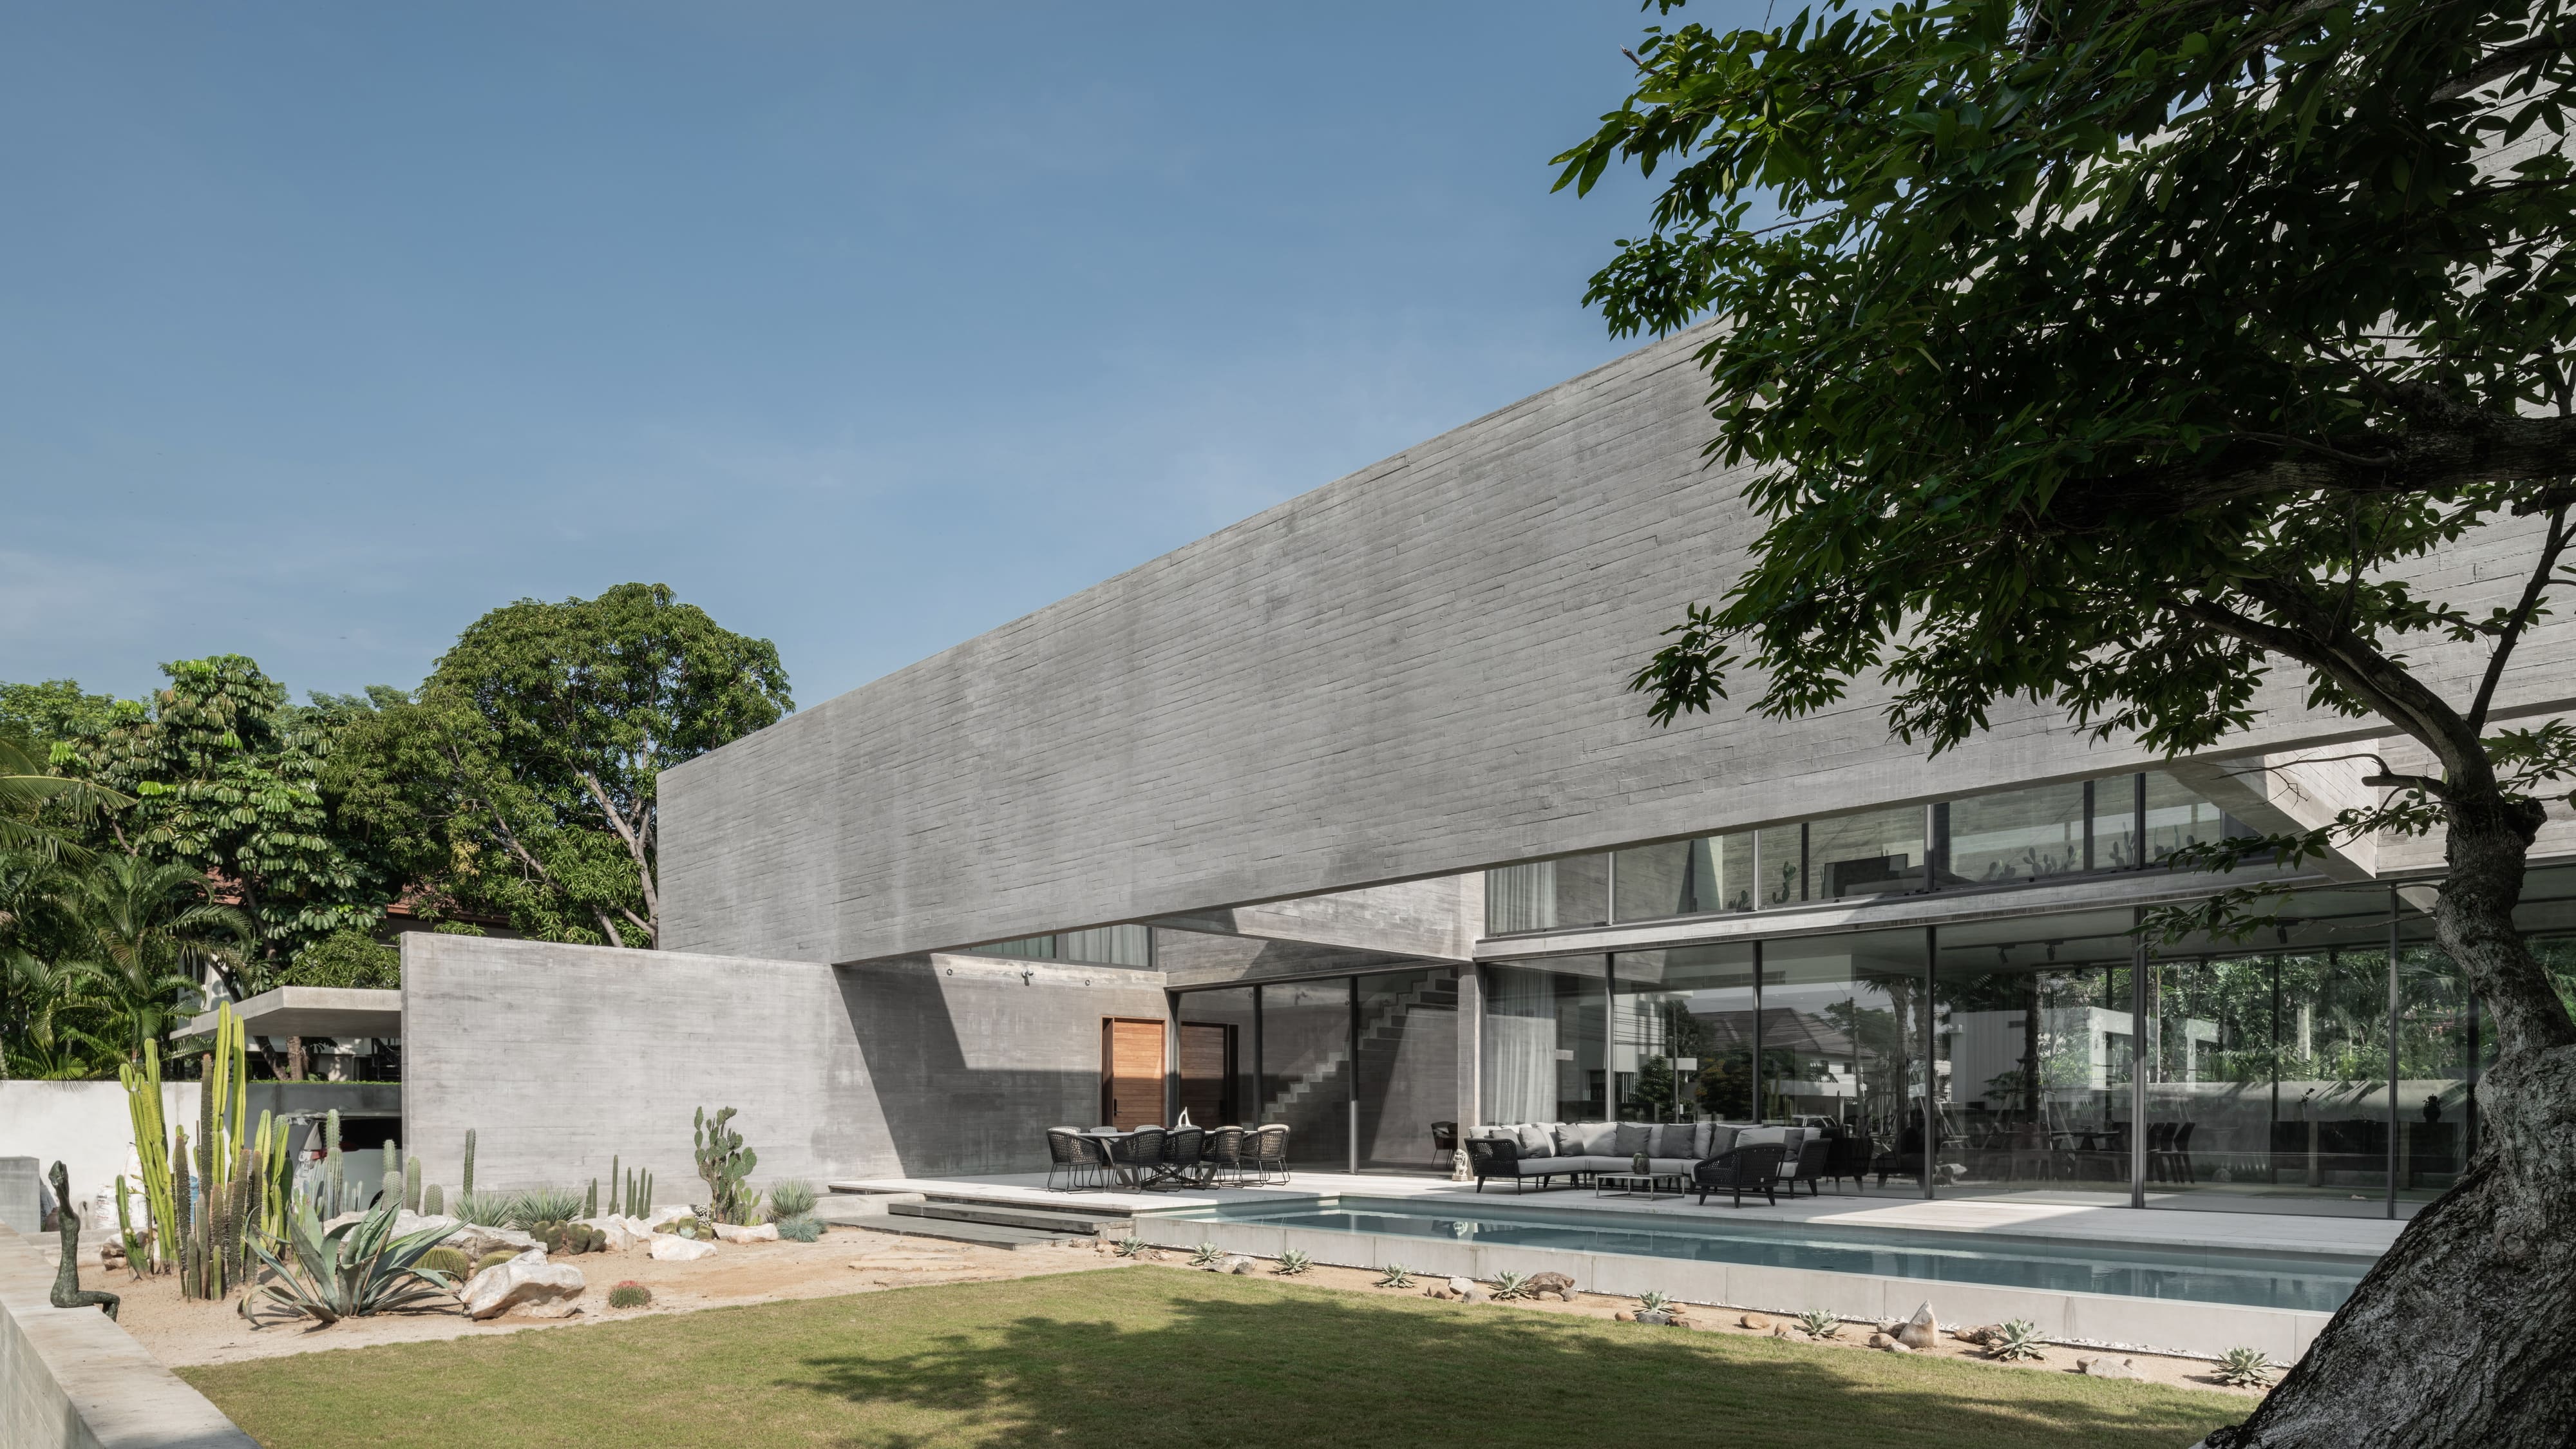 Casa de Alisa: The Radiant Beauty of Exposed Concrete